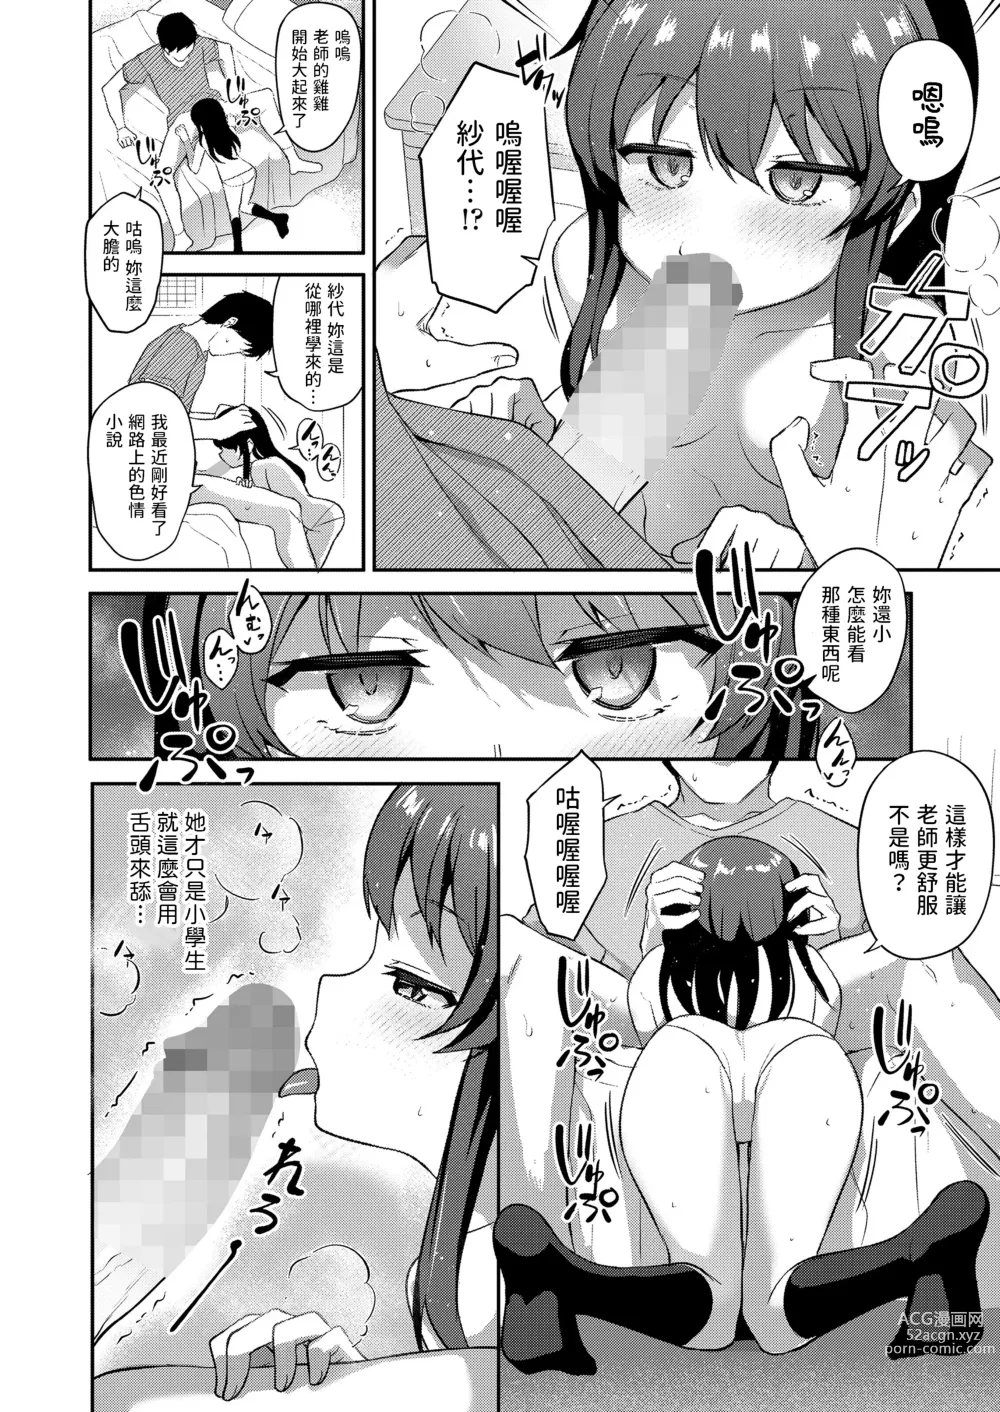 Page 10 of manga Cool na Anoko no Kokoro Moyou